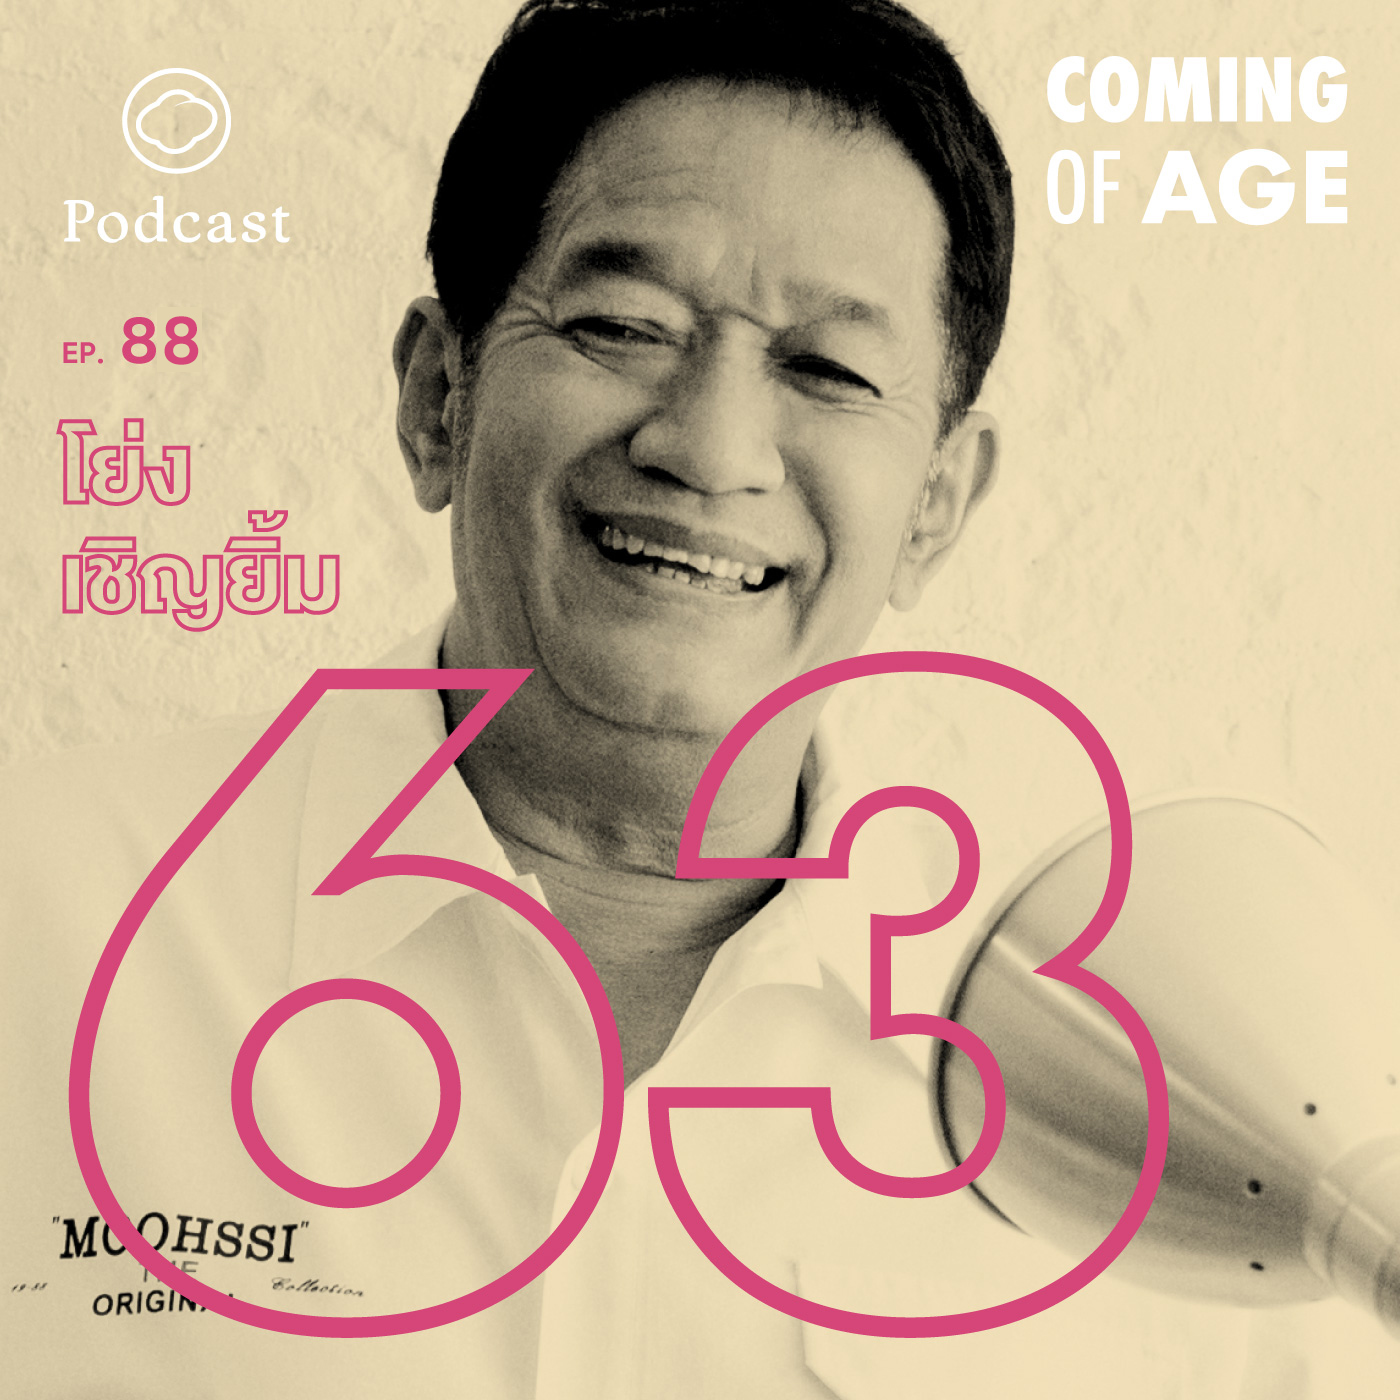 Coming of Age | EP. 88 | โย่ง เชิญยิ้ม วัย 63 อดีตดาวร้ายลิเกผู้ทำให้คนไทยร้อง ’เอชา’ ได้ทั่วเมือง - The Cloud Podcast